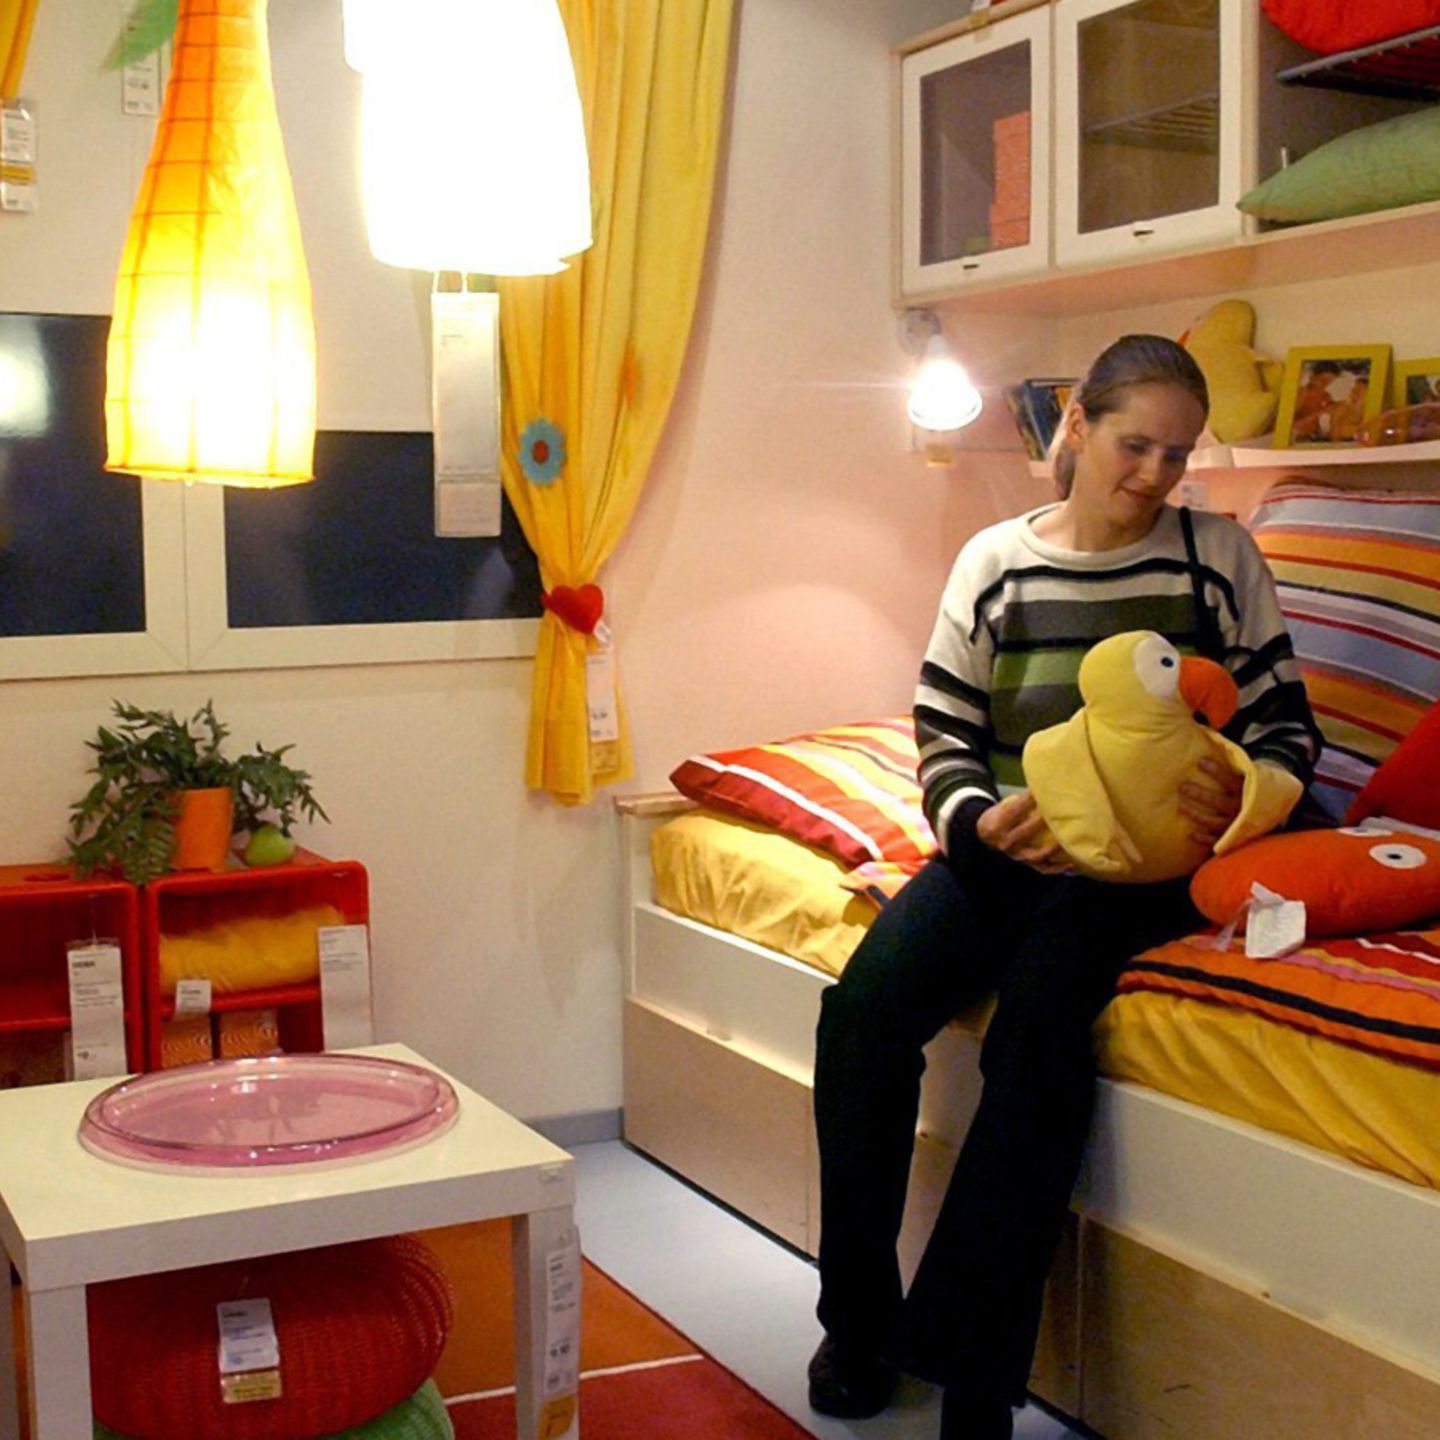 Ikea-Möbel: Öko-Test stellt komplettes Kinderzimmer Prüflabor | STERN.de